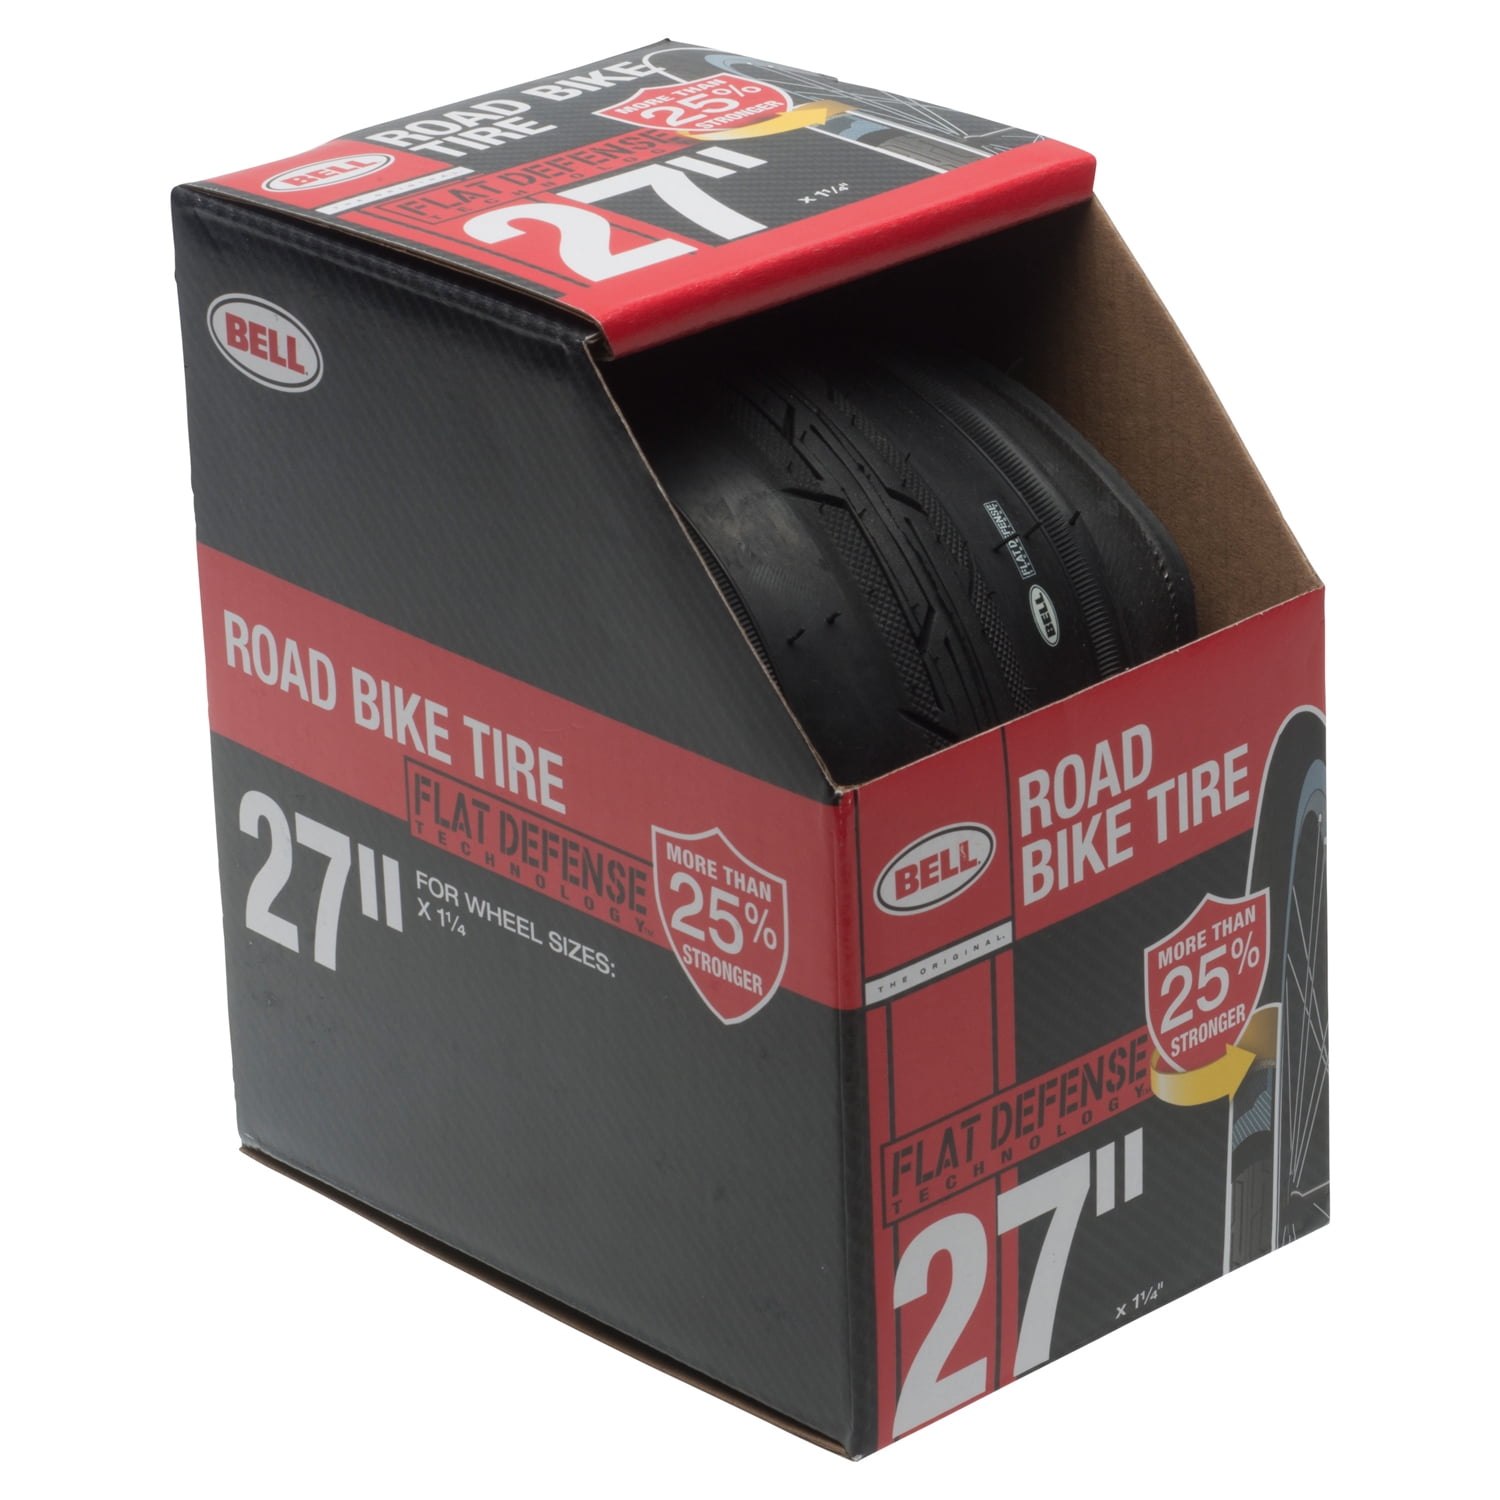 BELL Flat Defense Mountain Bike Tire 26" x 2" Black Replaces Sizes 1.75"-2.125" 